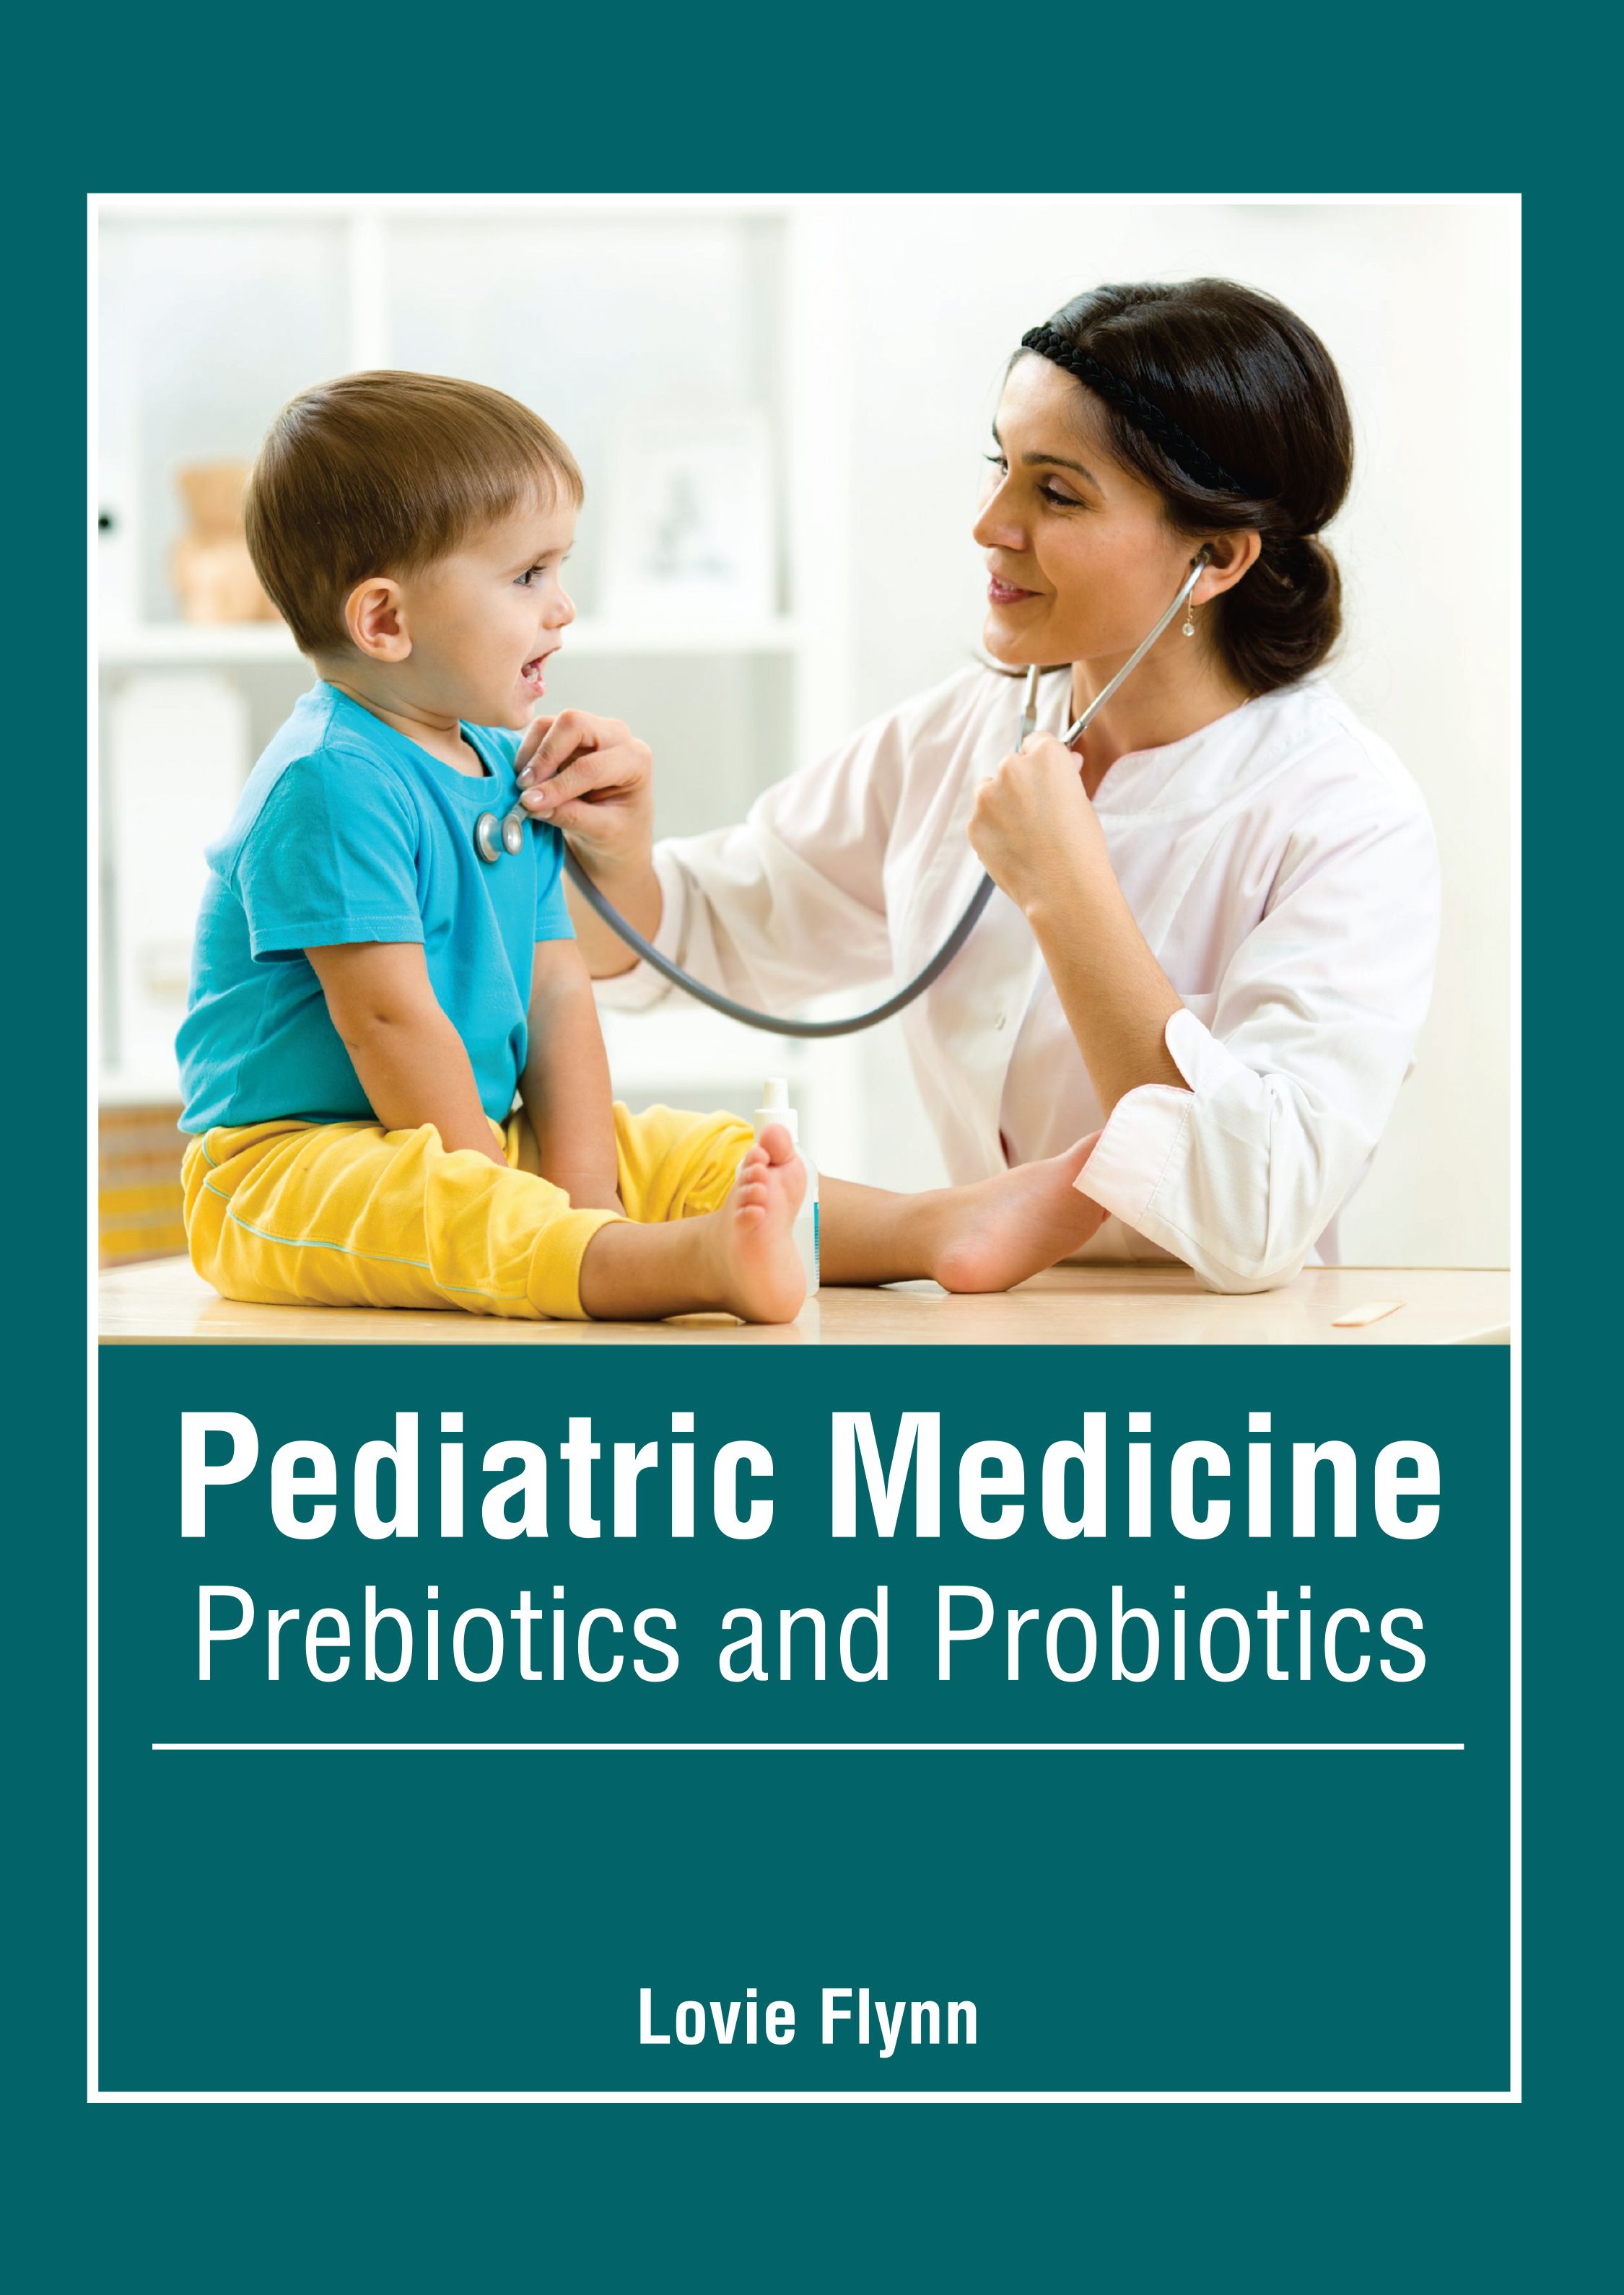 

exclusive-publishers/american-medical-publishers/pediatric-medicine-prebiotics-and-probiotics-9798887403687